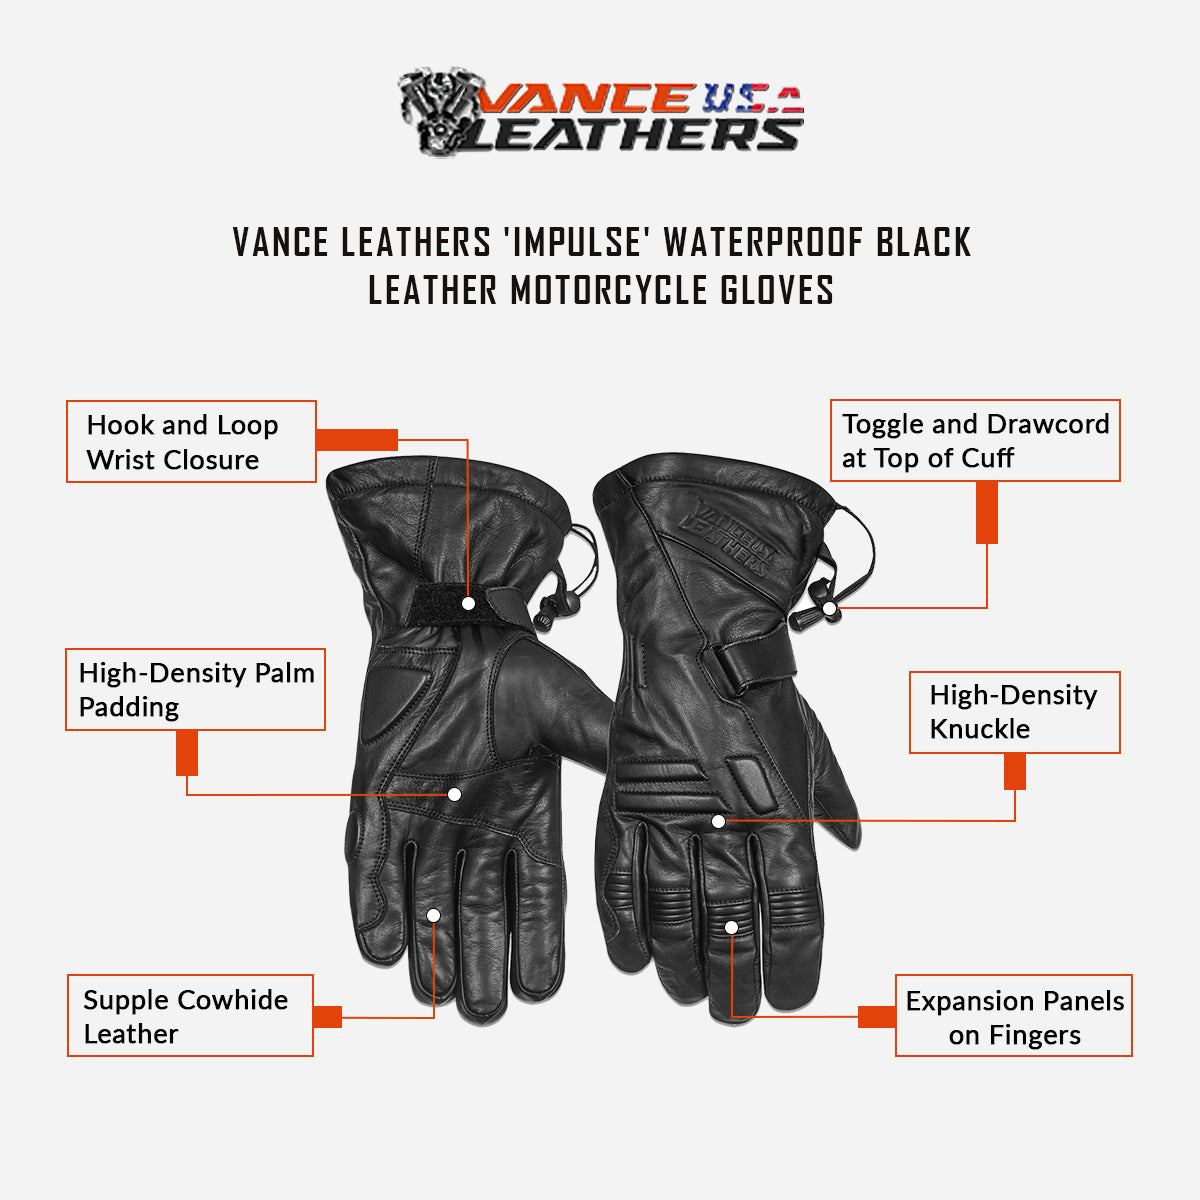 Vance VL410 Impulse Waterproof Leather Motorcycle Gloves - info